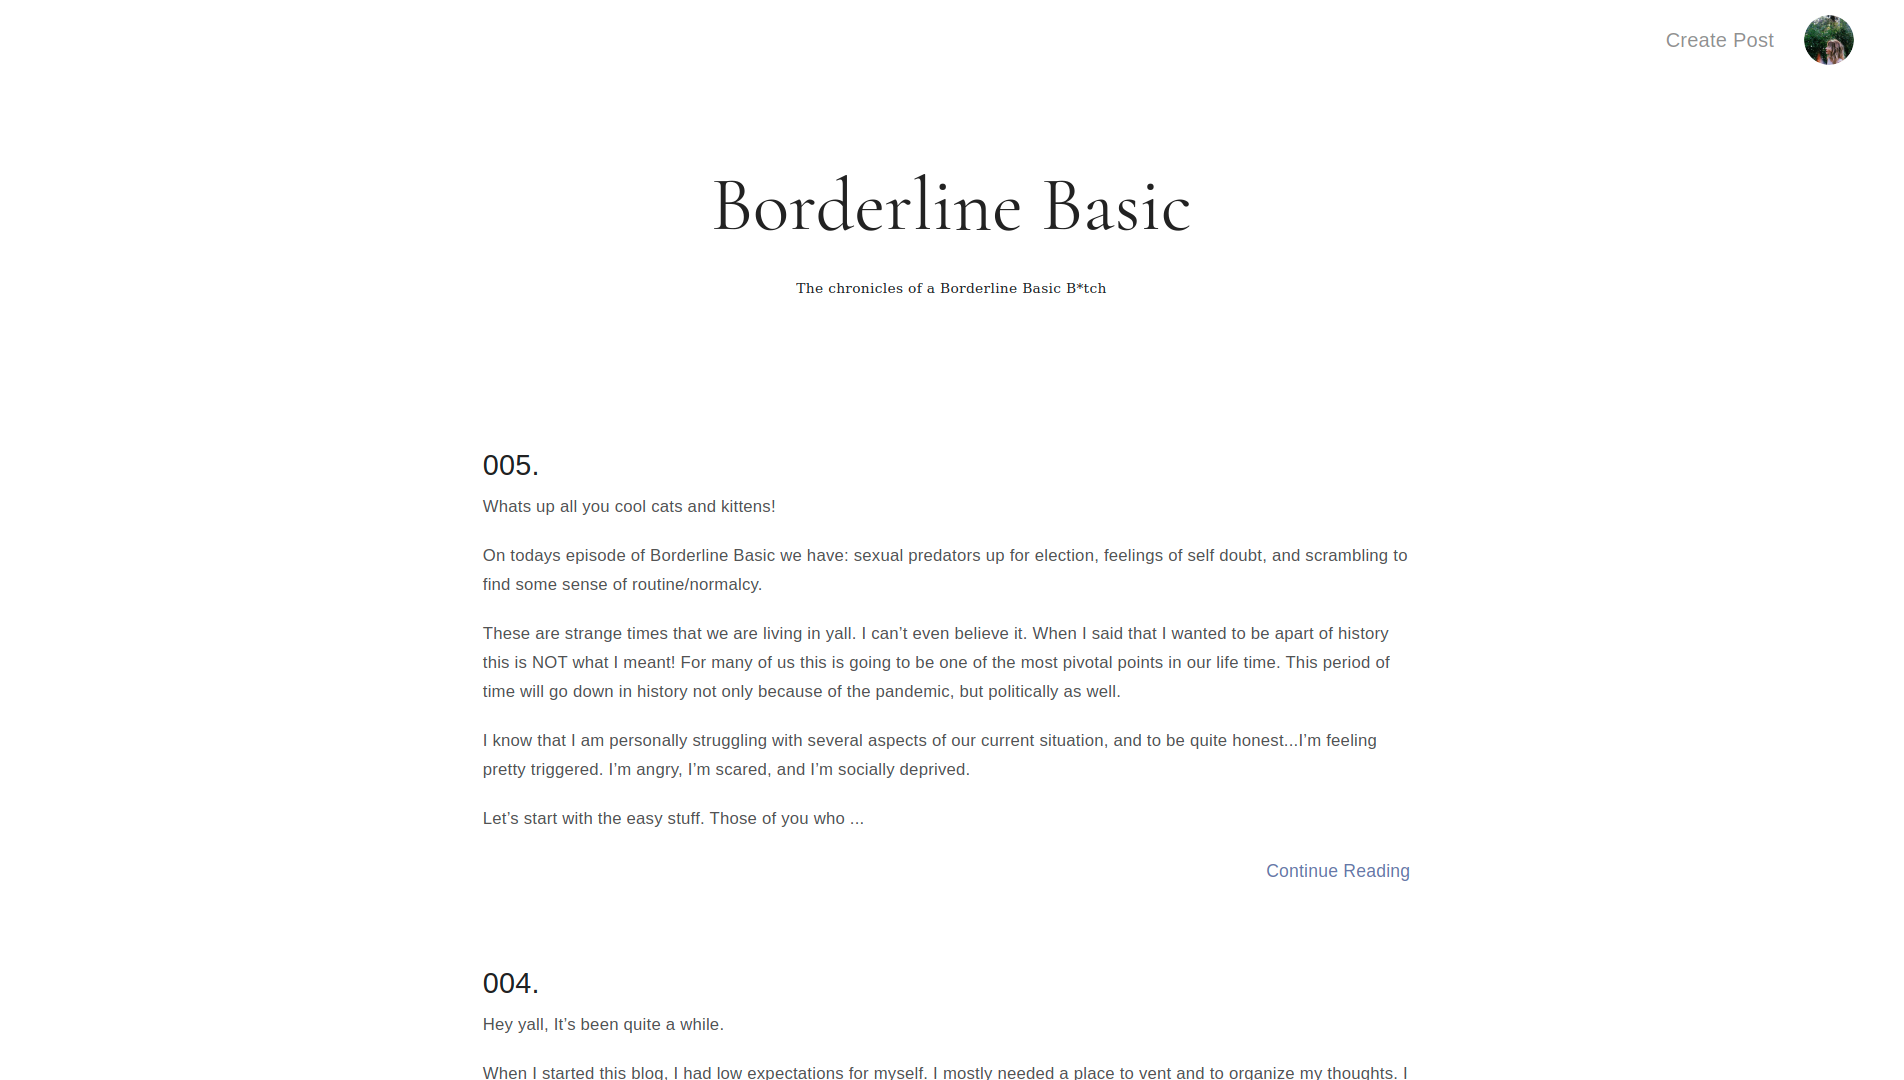 Borderline Basic blog application, a development project by Full Stack Developer Benjamin Chavez